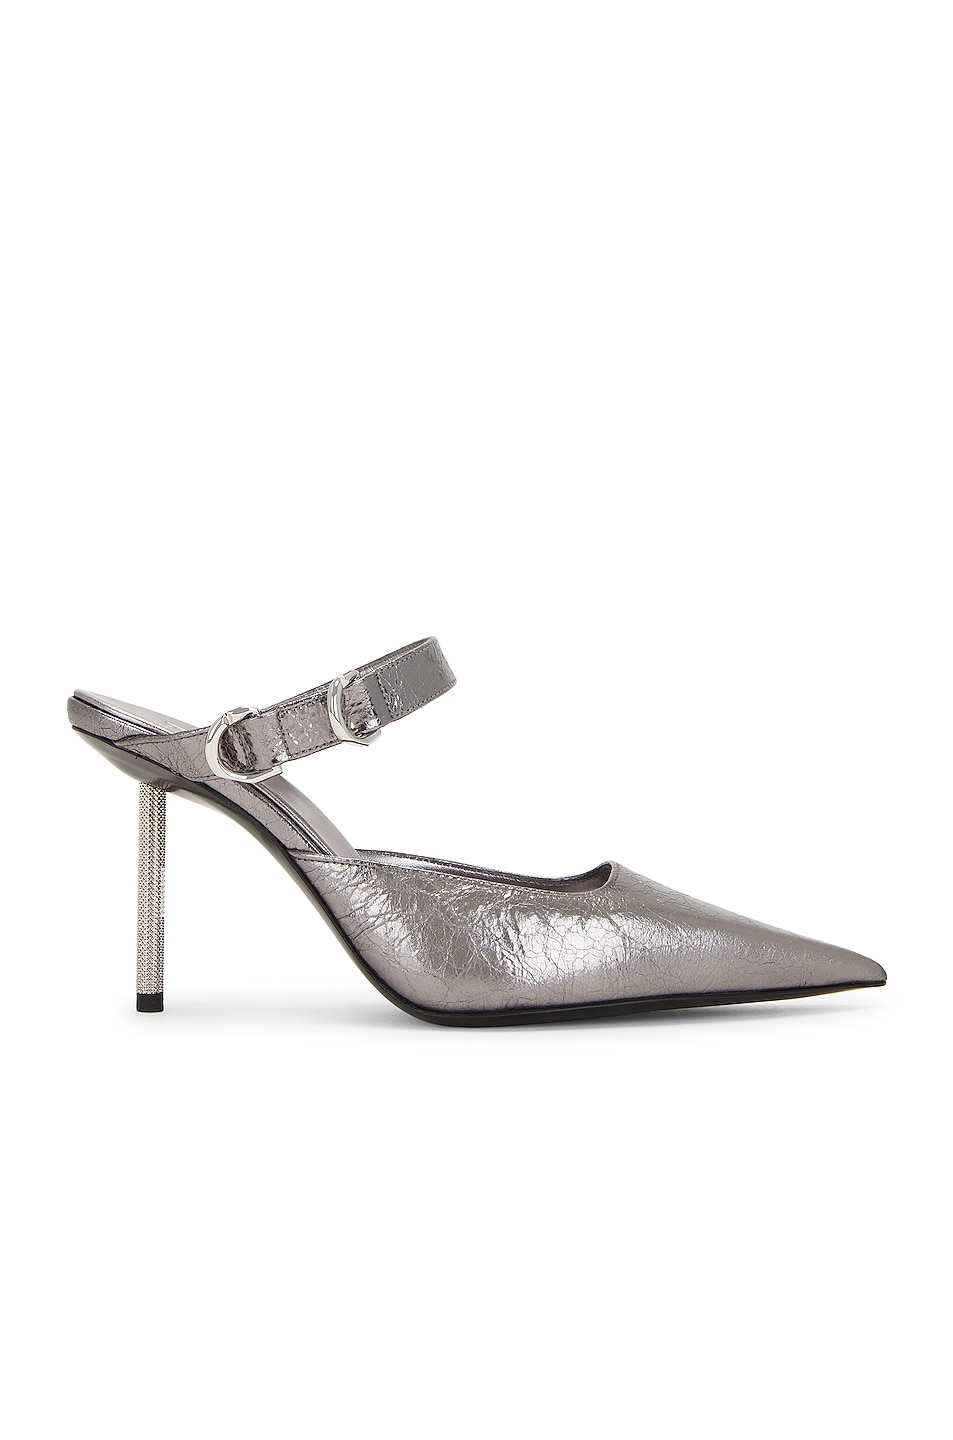 Givenchy Voyou Mule in Silvery Grey | FWRD